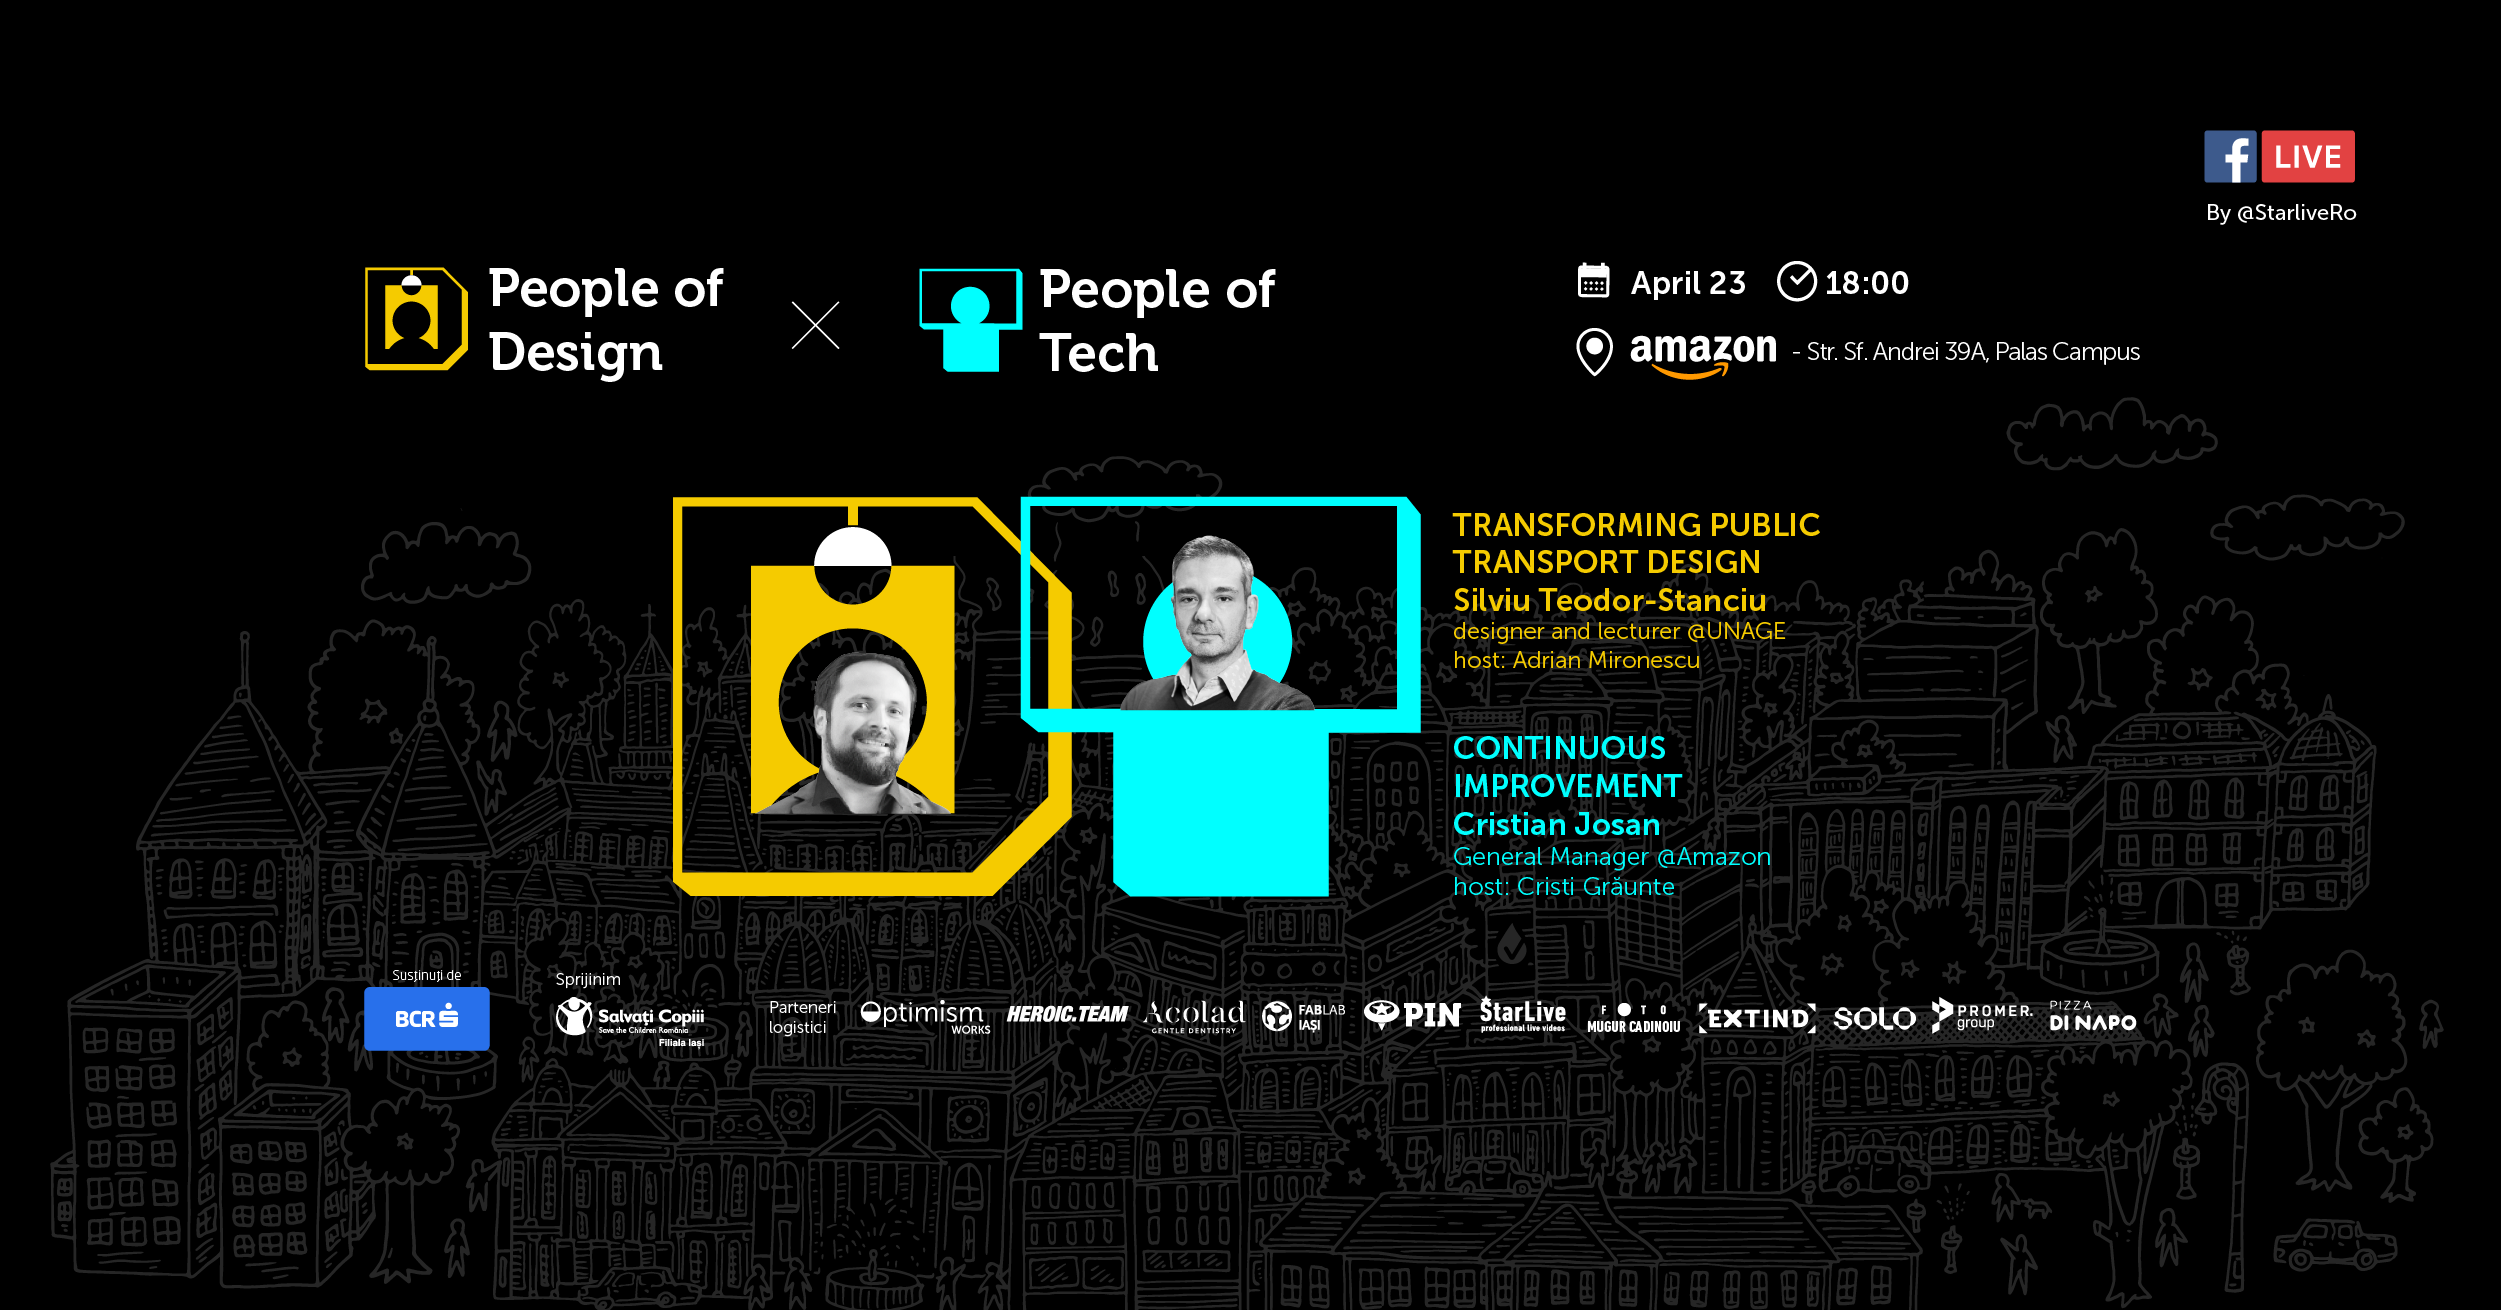 People of Design & Tech meetings #4, 23th April Silviu Teodor-Stanciu & Cristian Josan